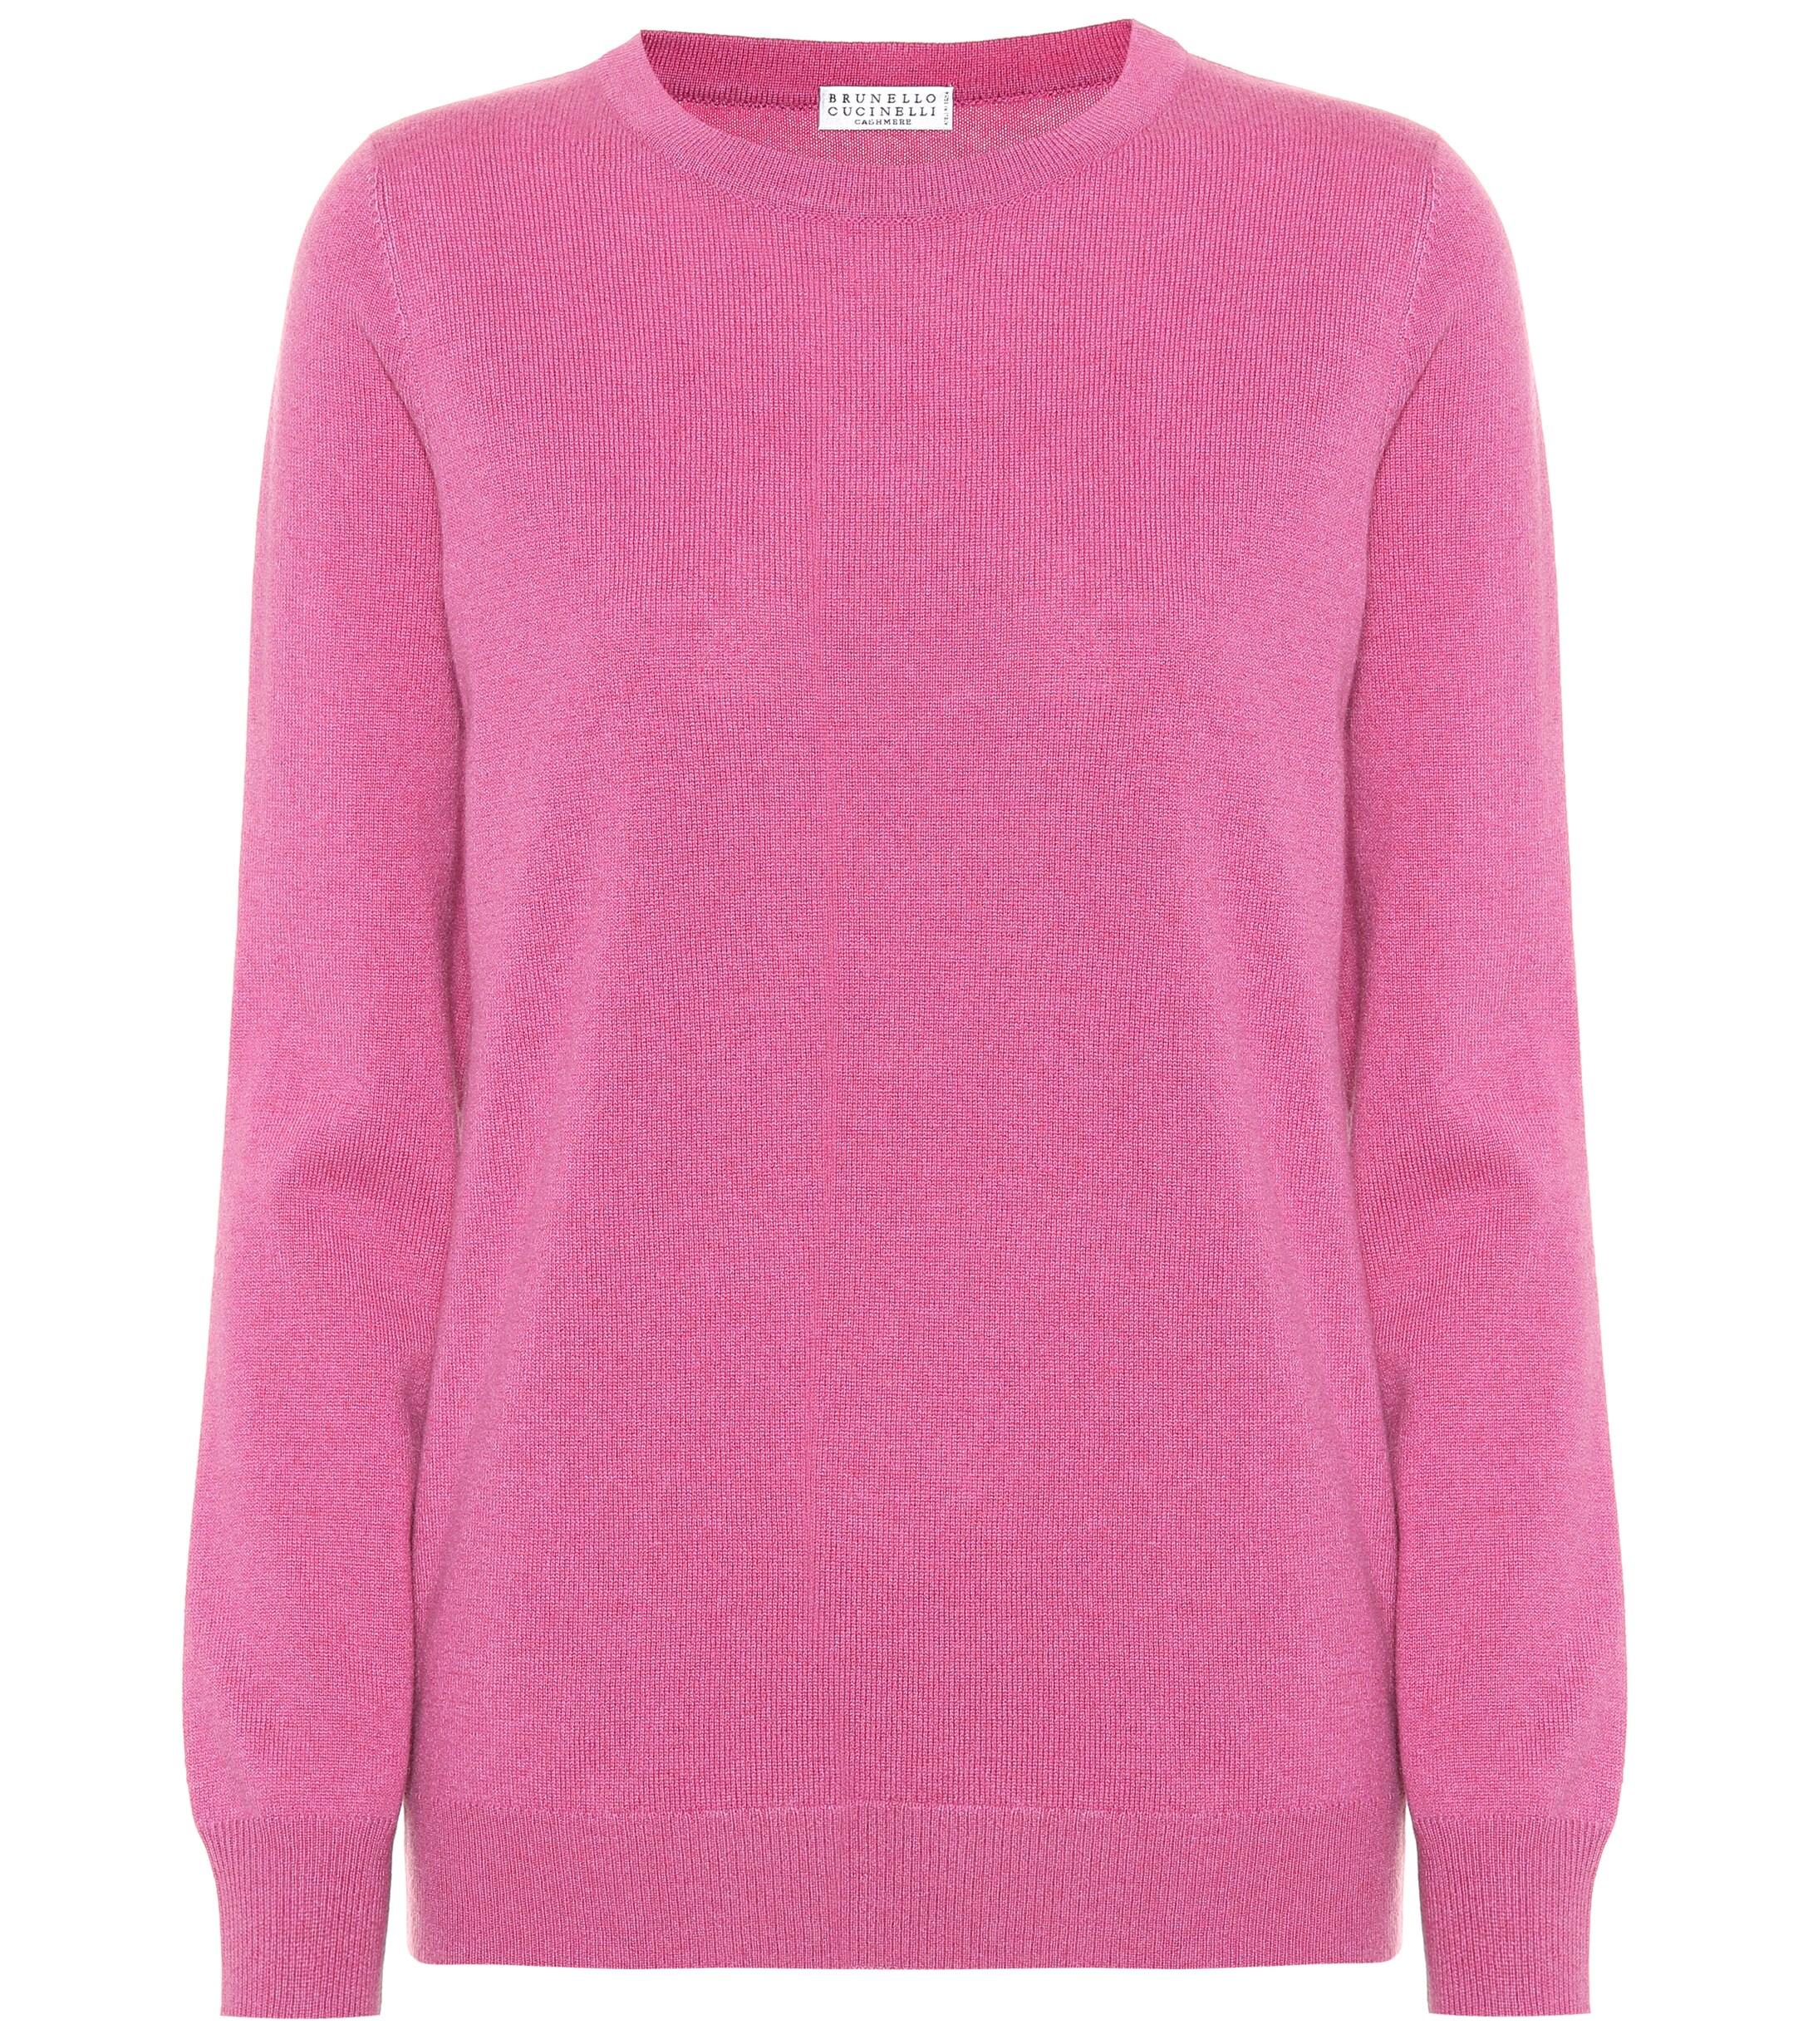 Brunello Cucinelli Cashmere Sweater in Pink - Lyst